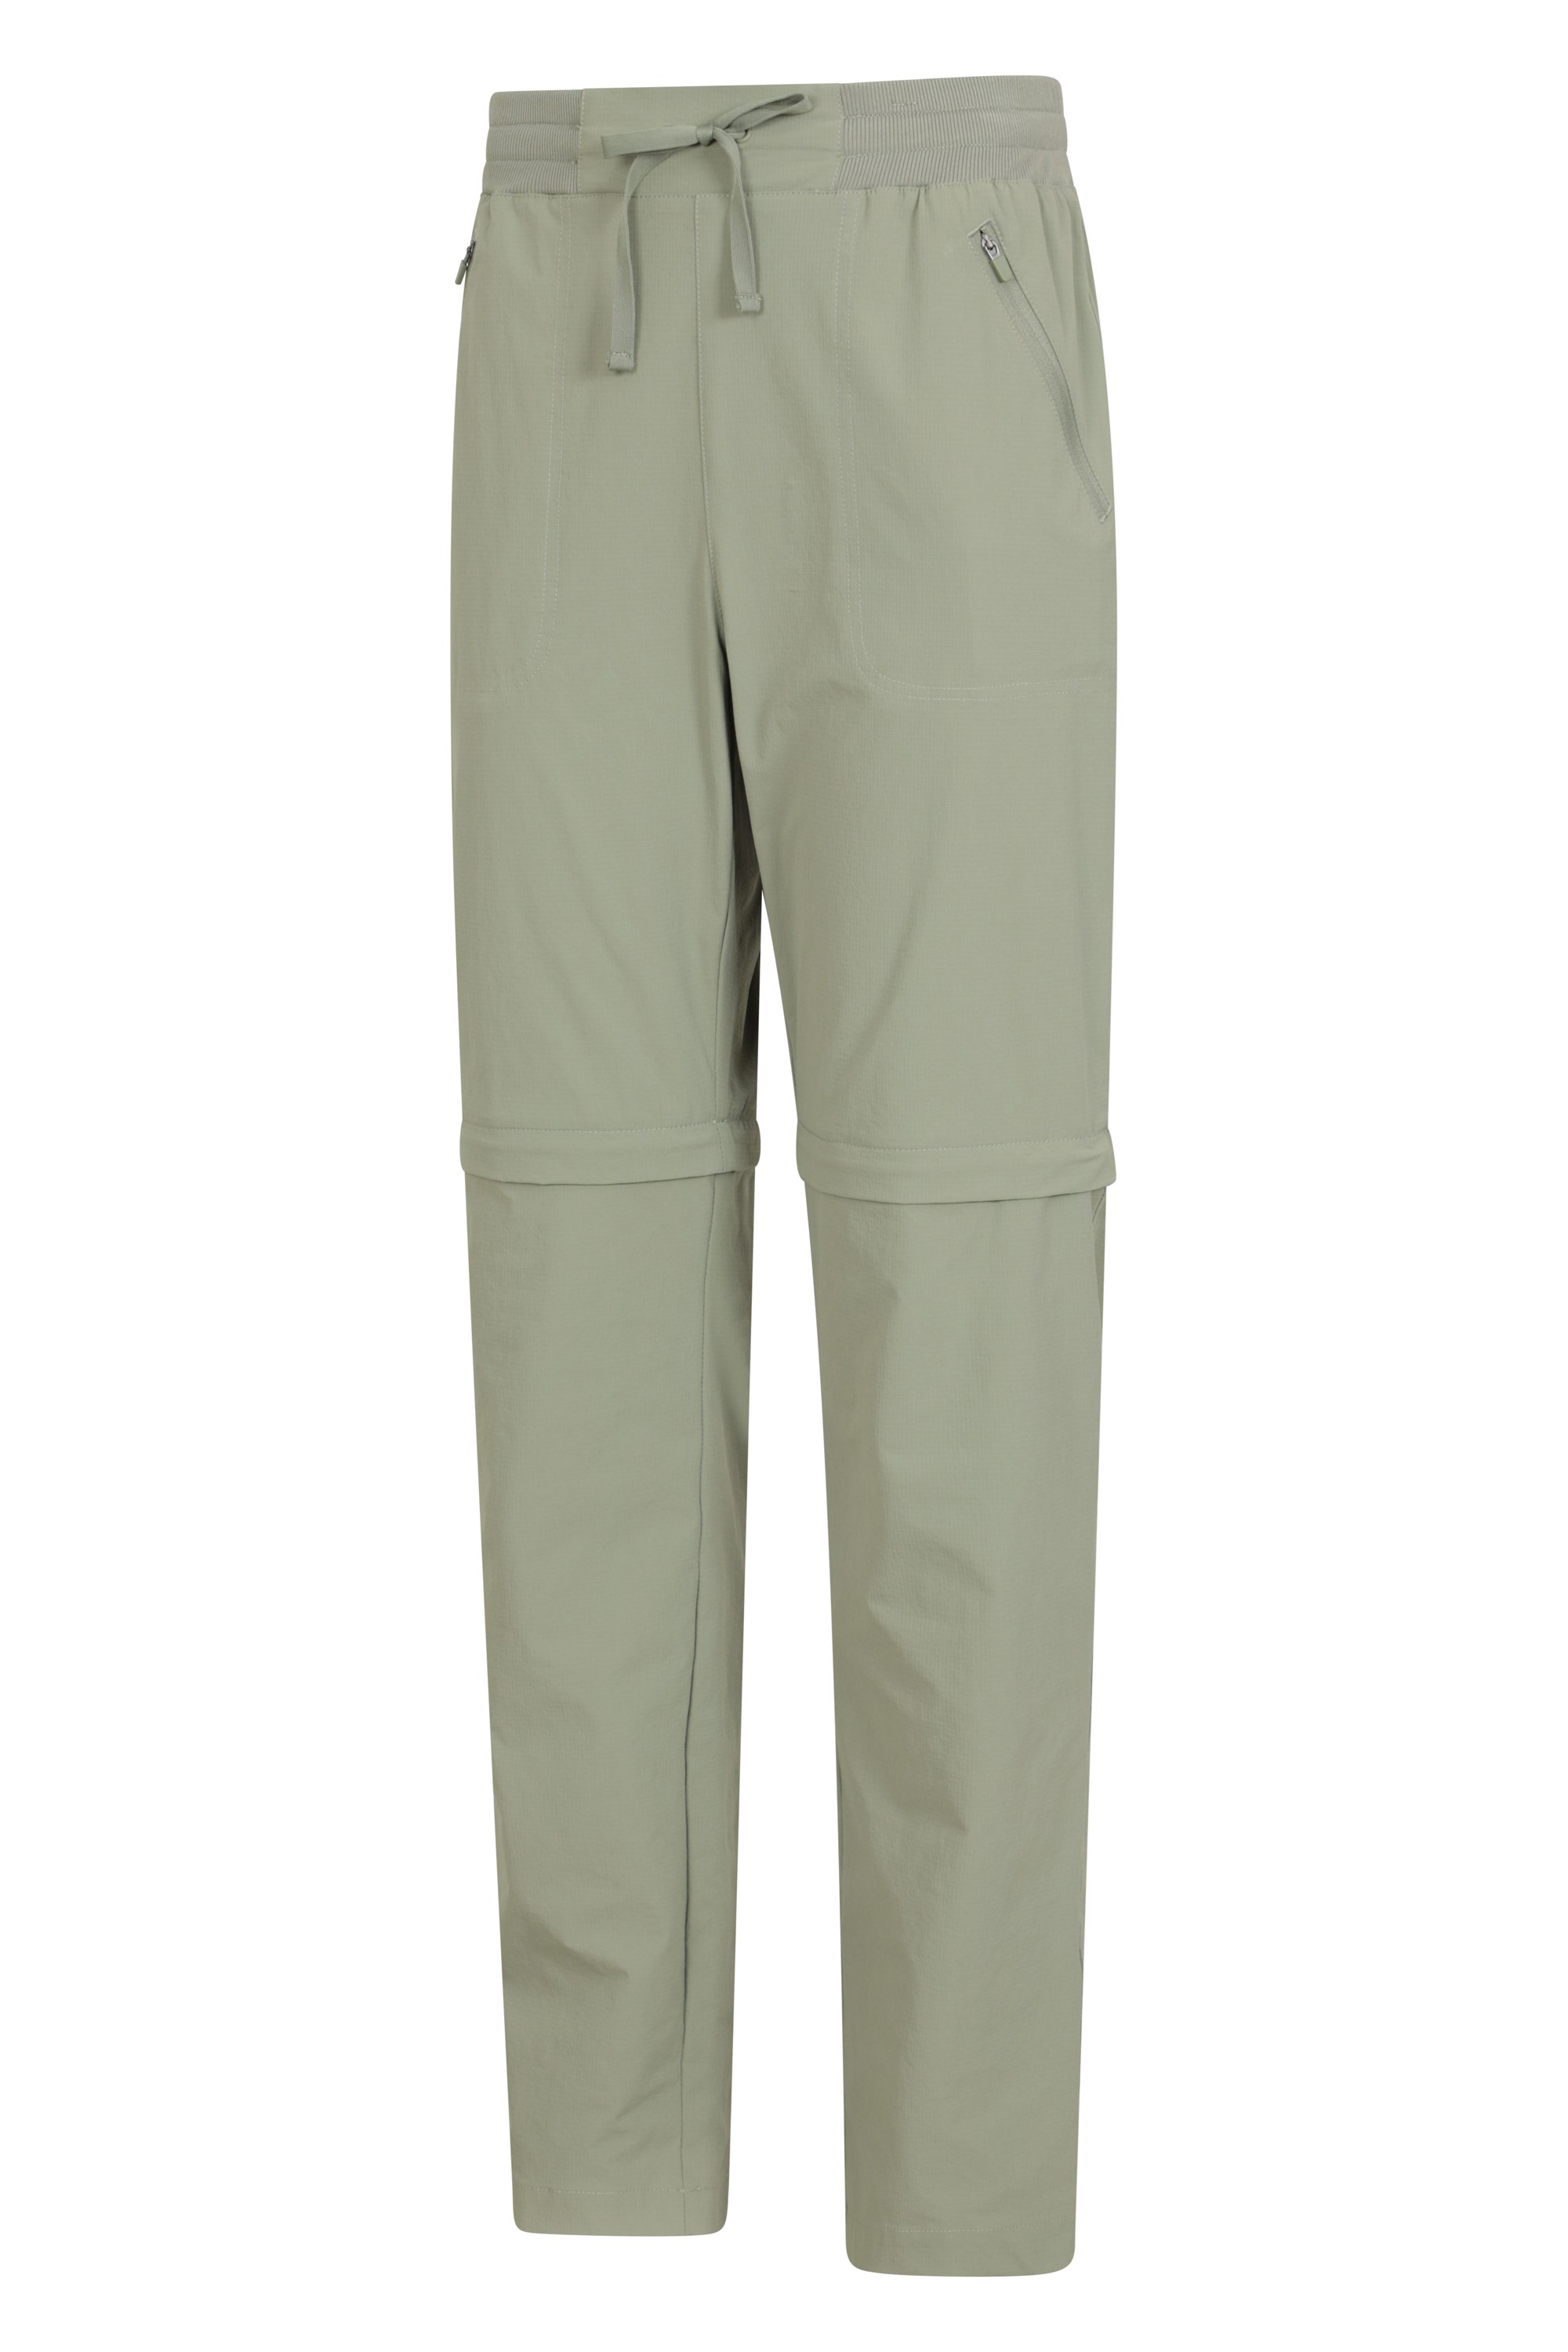 Mountain Warehouse Explorer Womens Zip-Off Pants - Short Length - Green | Size 10